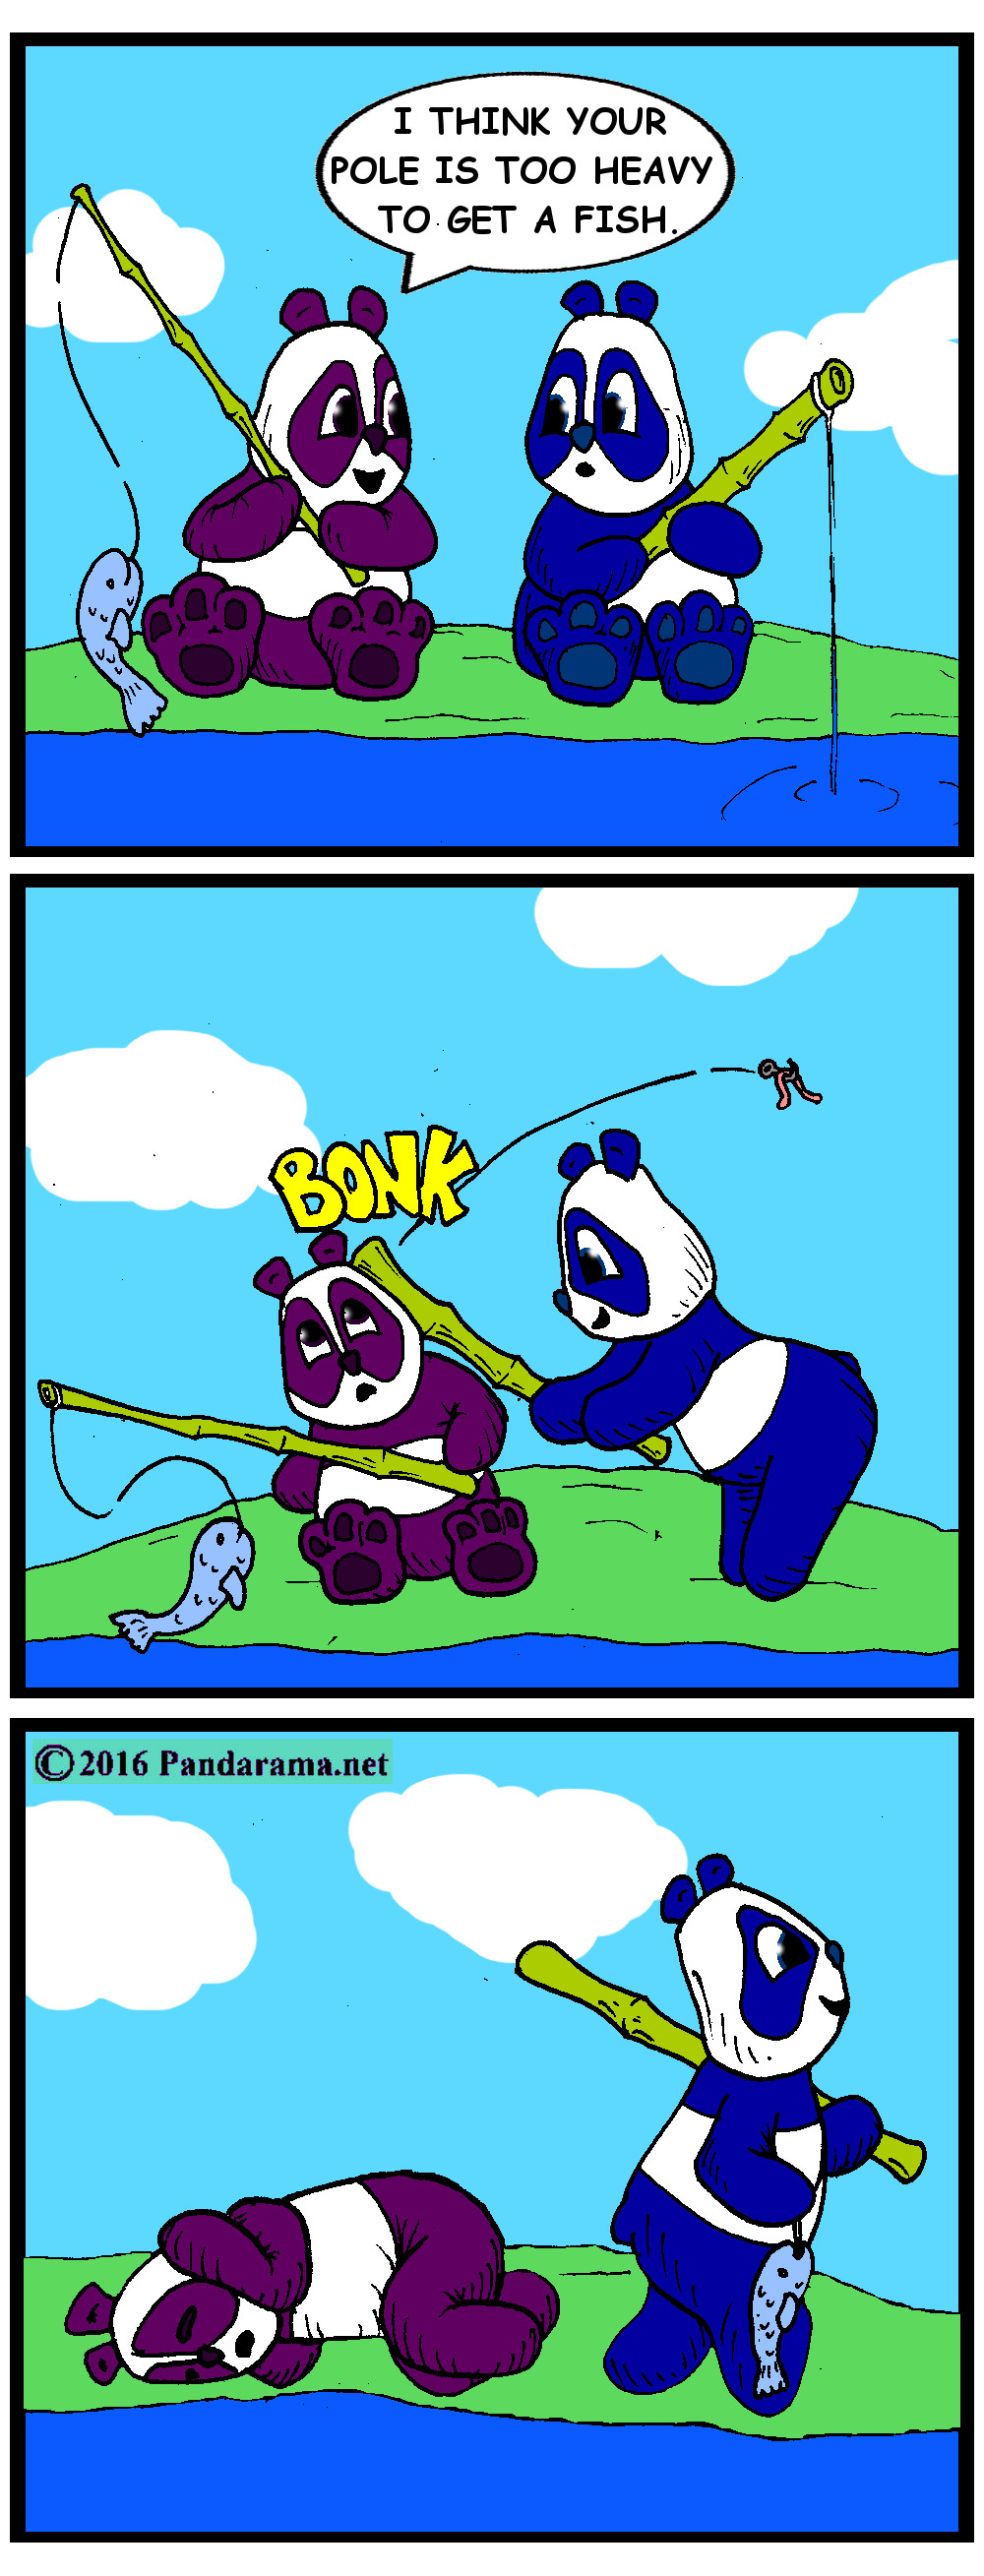 panda uses heavy fishing rod as bludgeon to steal other panda's fish. fishing cartoon.